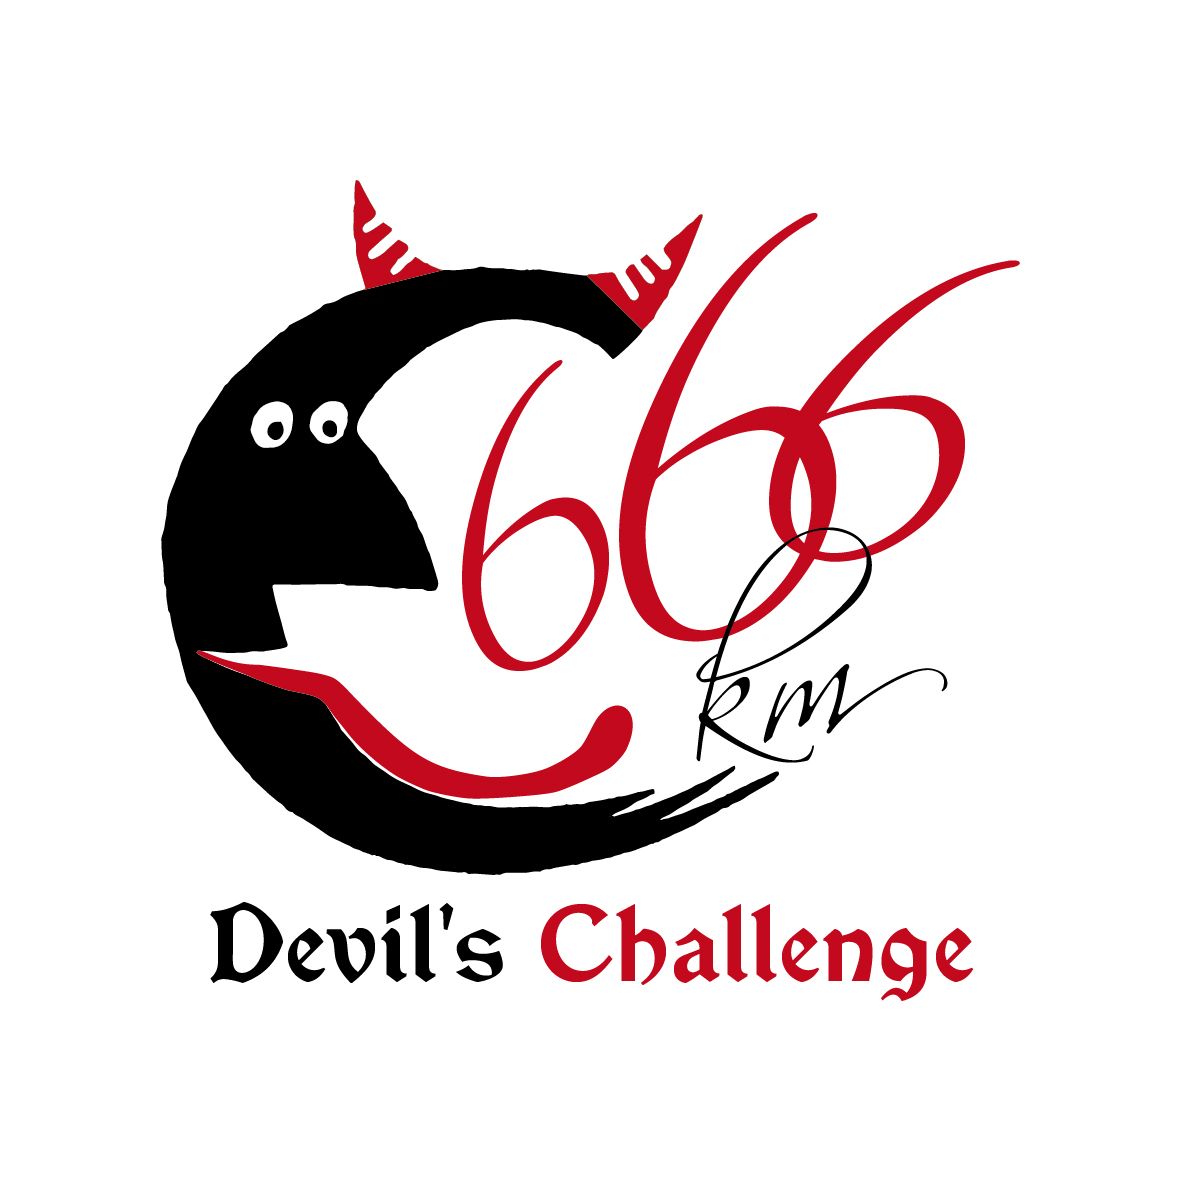 Devil's Challenge 666km